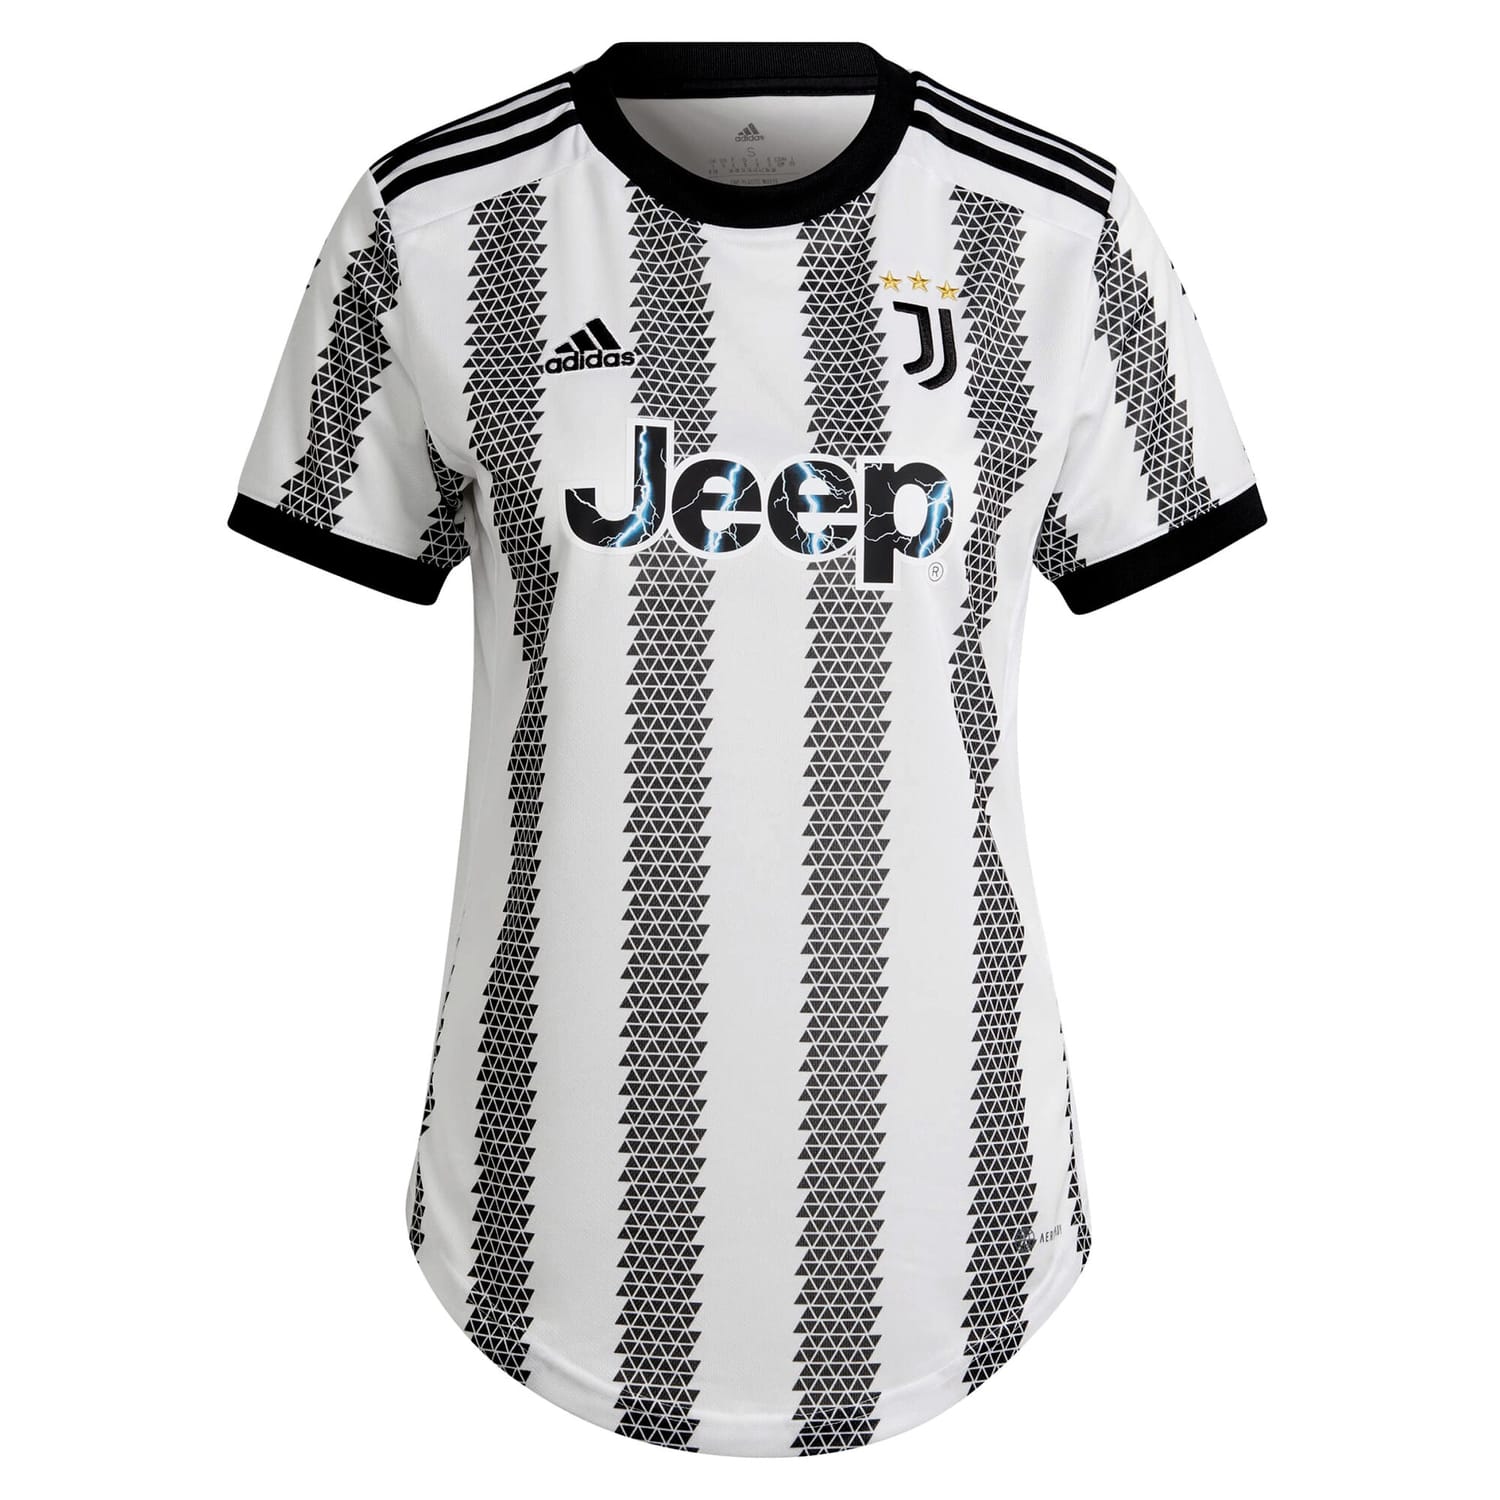 Serie A Juventus Home Jersey Shirt 2022-23 player Leonardo Bonucci 19 printing for Women